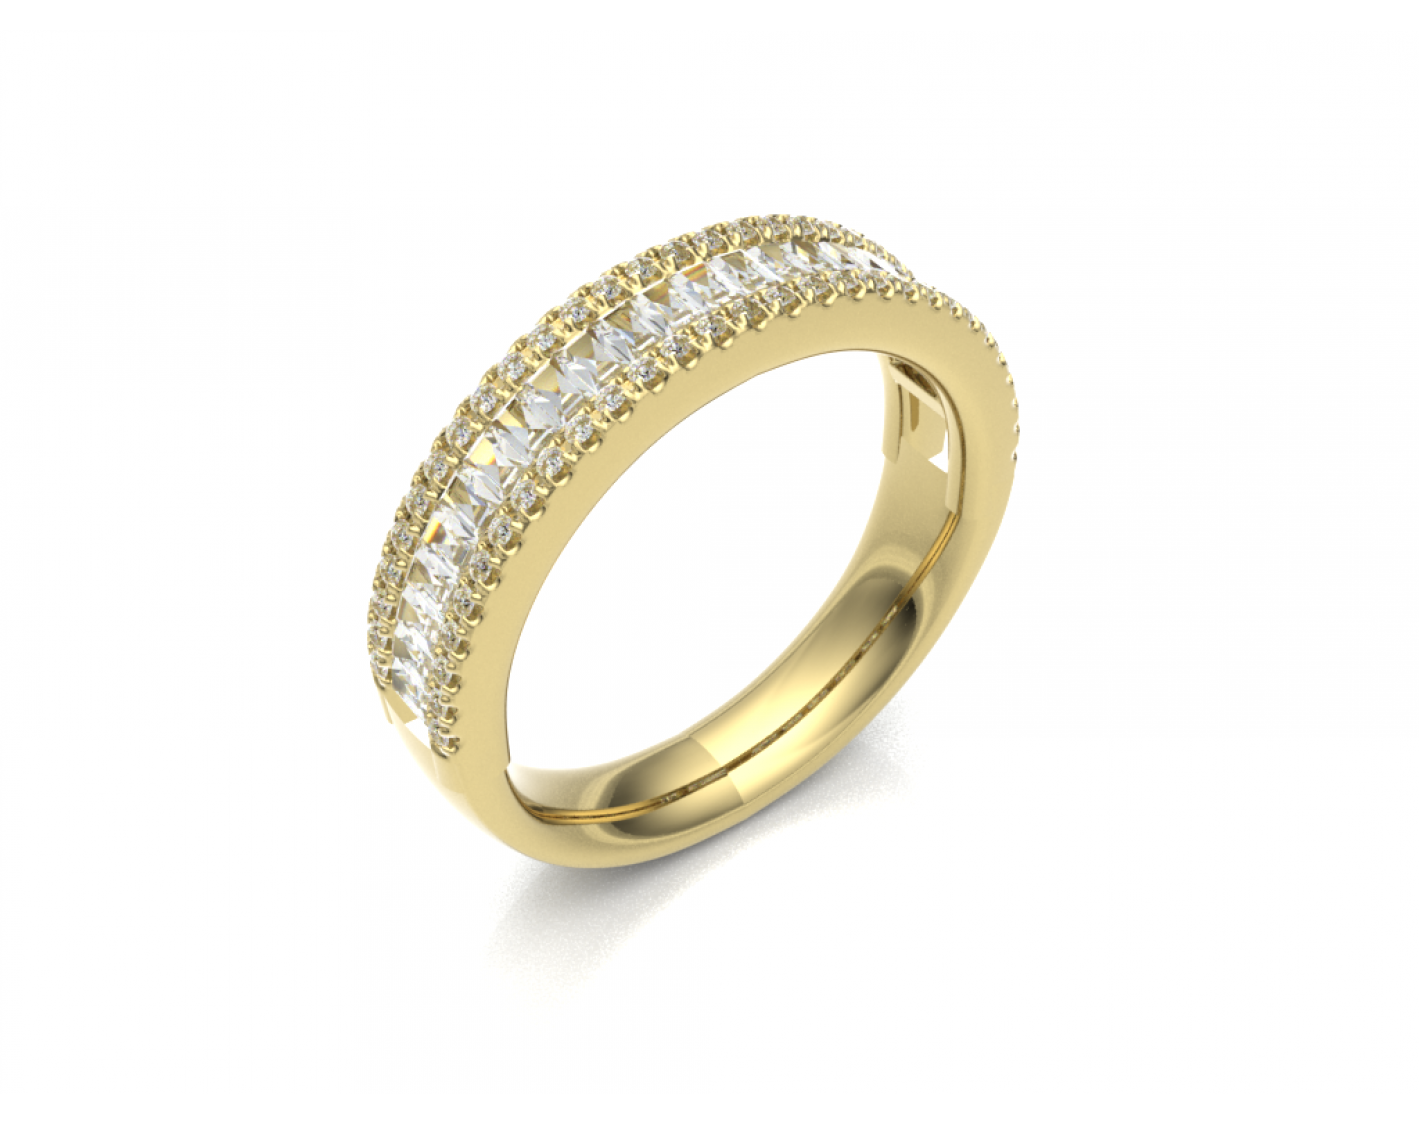 18k rose gold multirow round & baguette diamond ring Photos & images